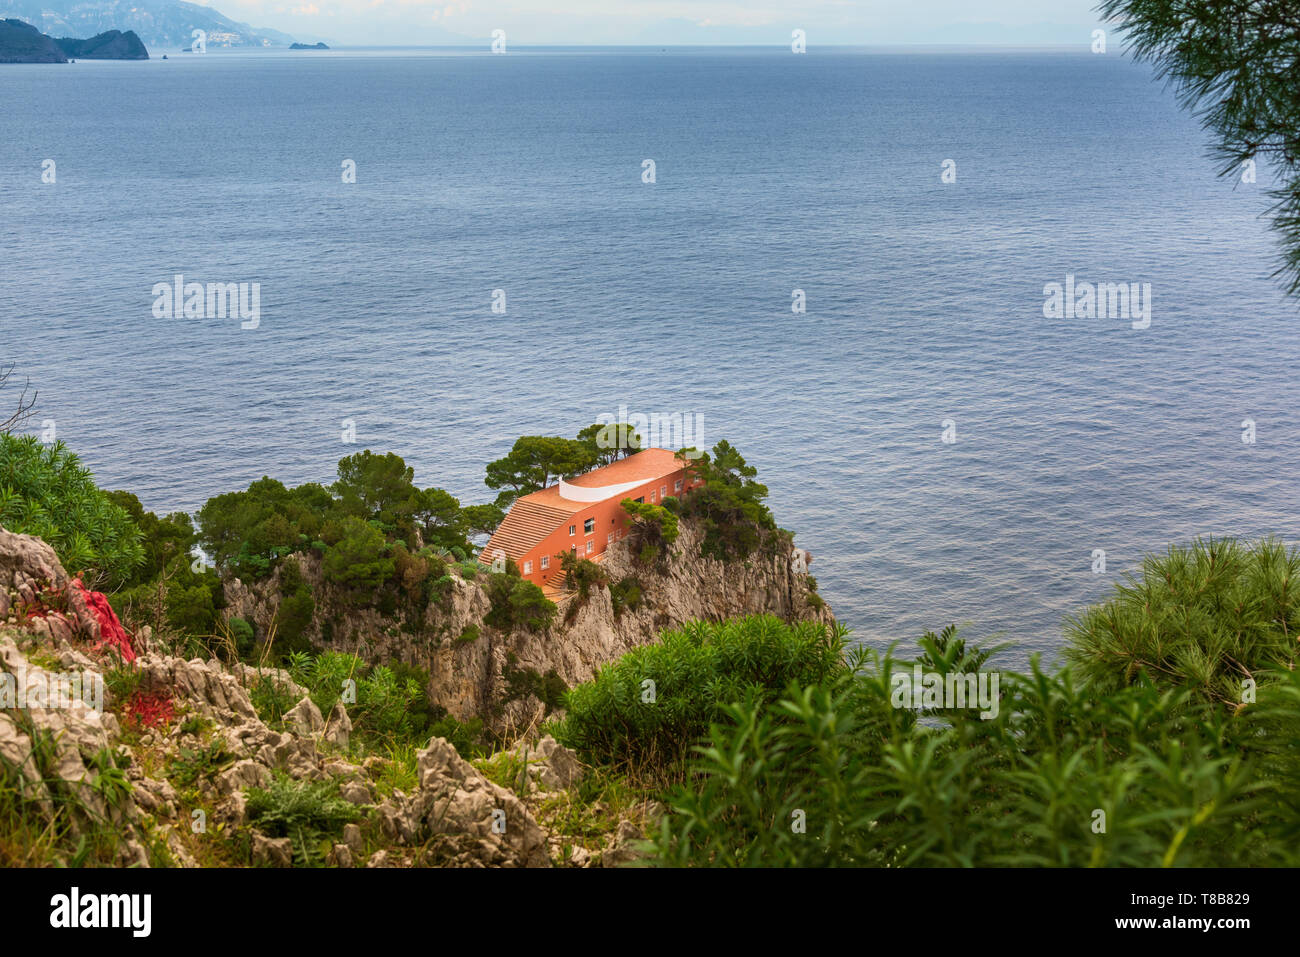 Villa Malaparte, Capri, Italy Stock Photo